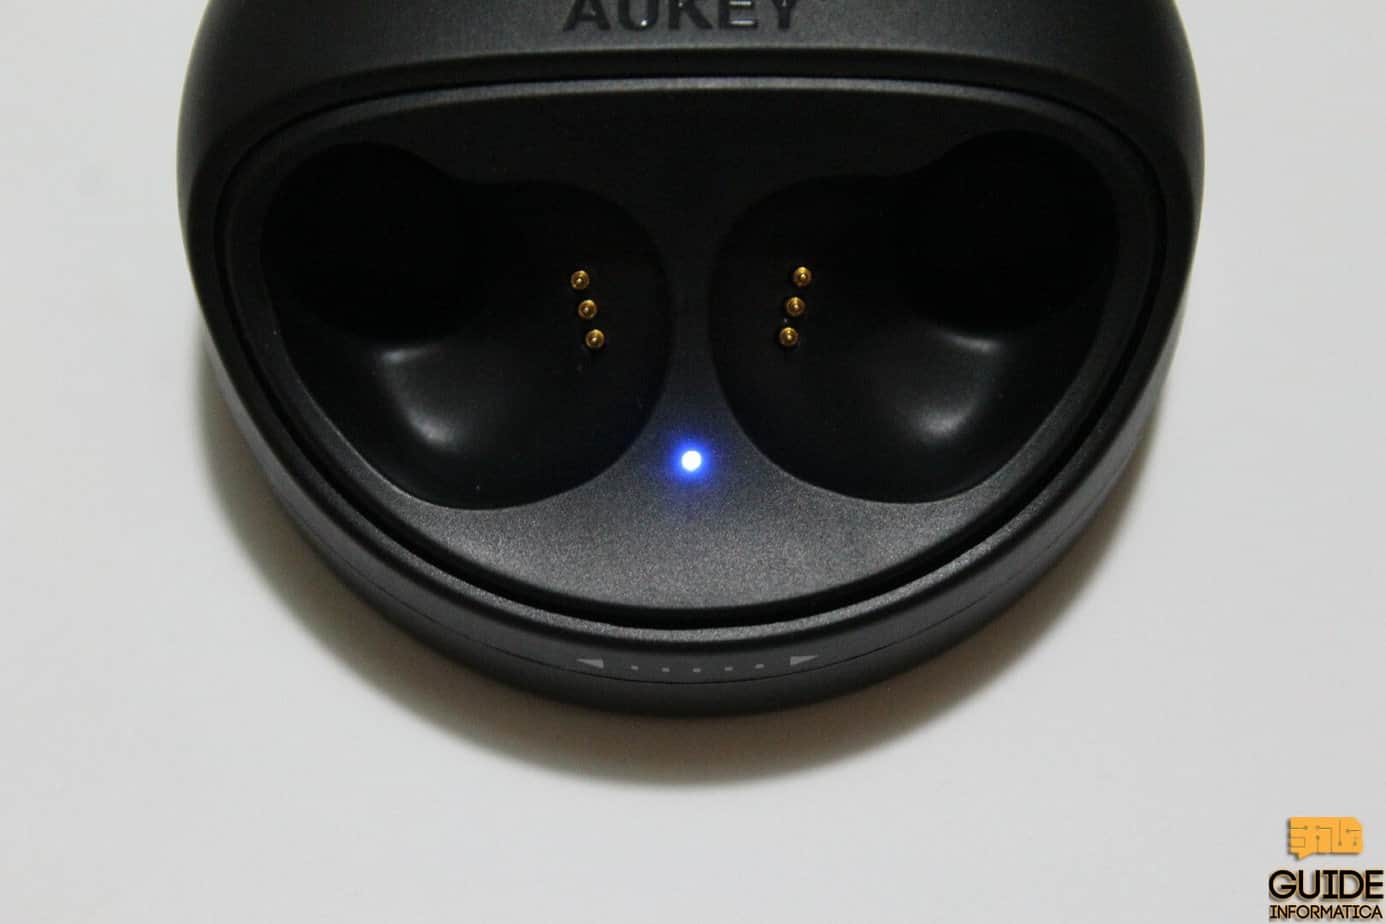 Aukey EP-T1 Auricolari true wireless recensione